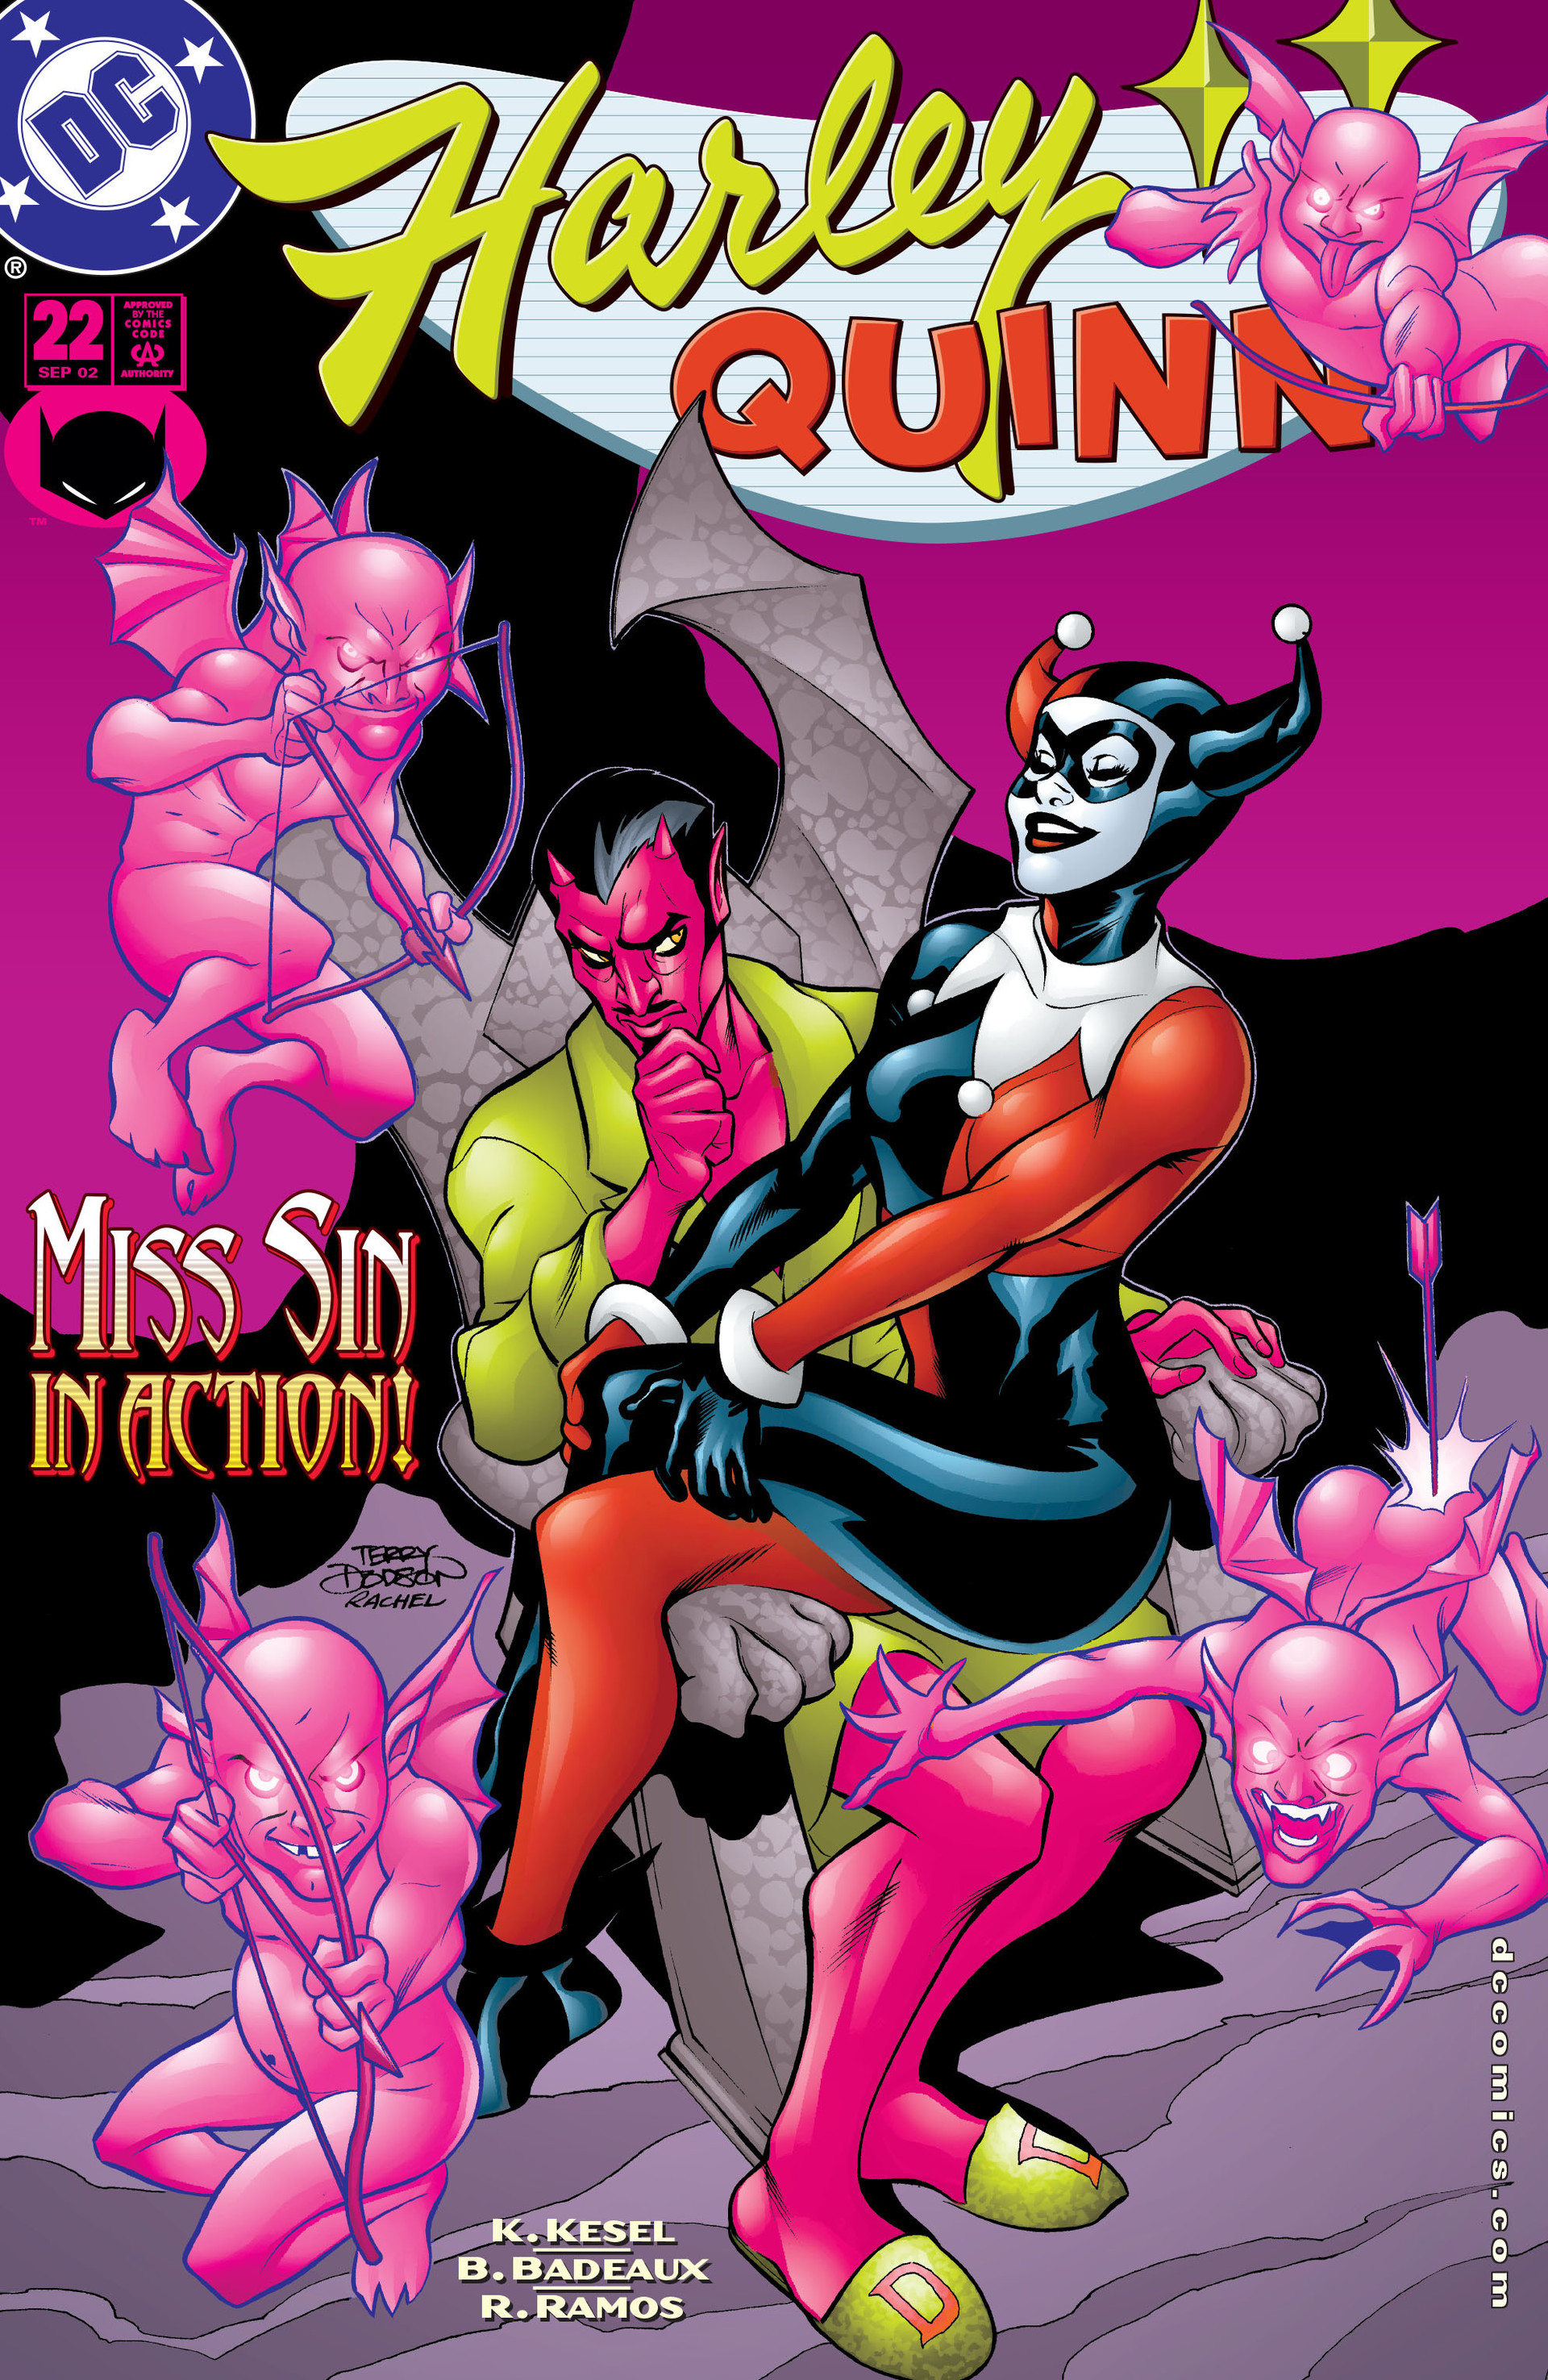 Harley Quinn (2000) Issue #22 #22 - English 1